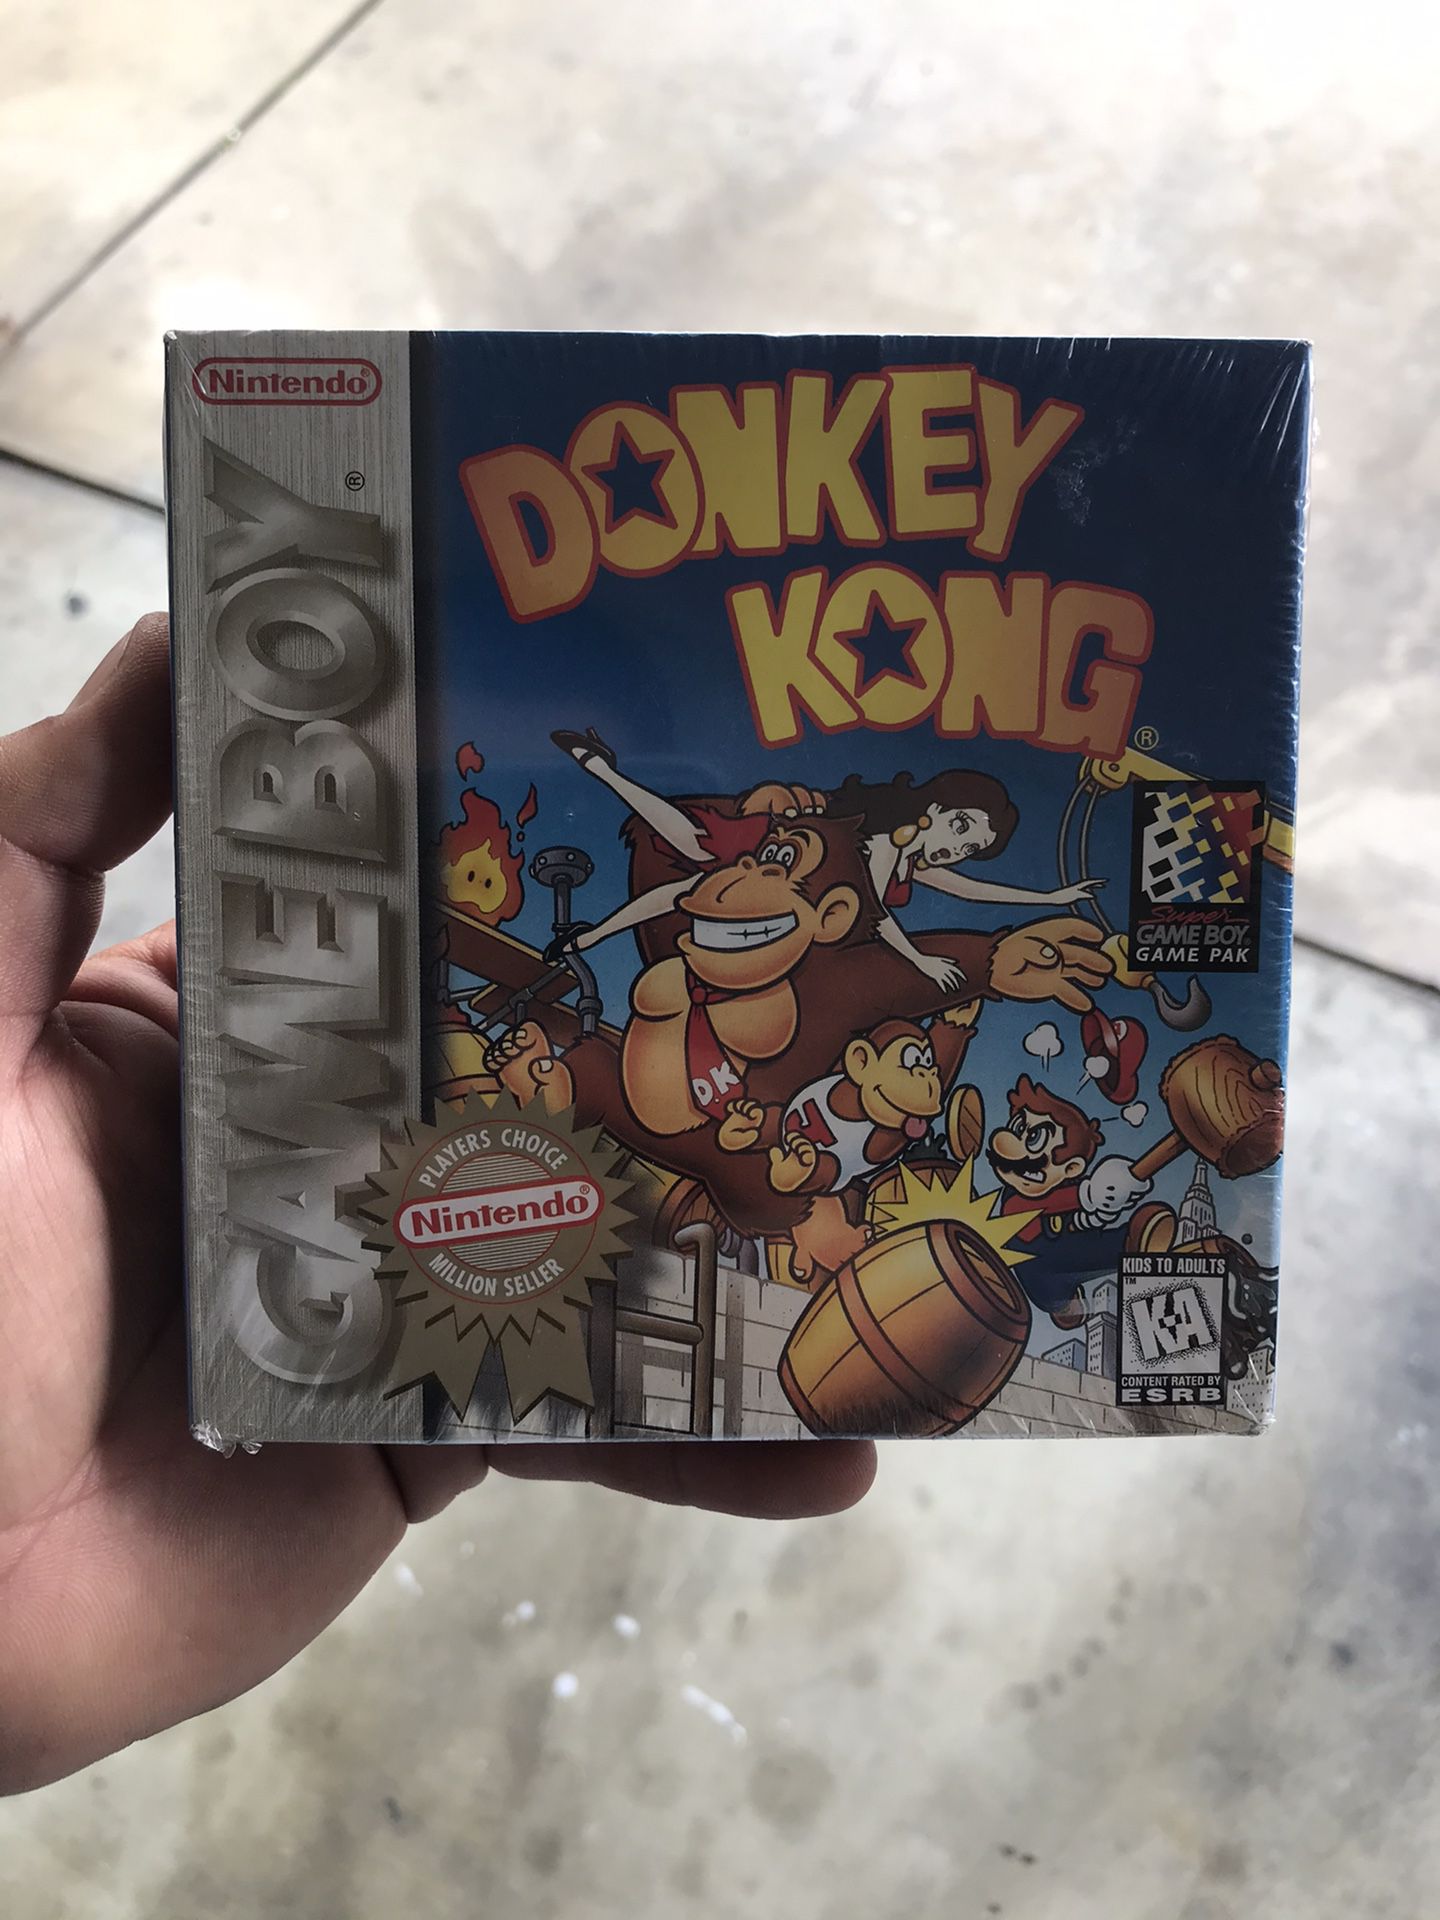 SEALED Donkey Kong for Gameboy